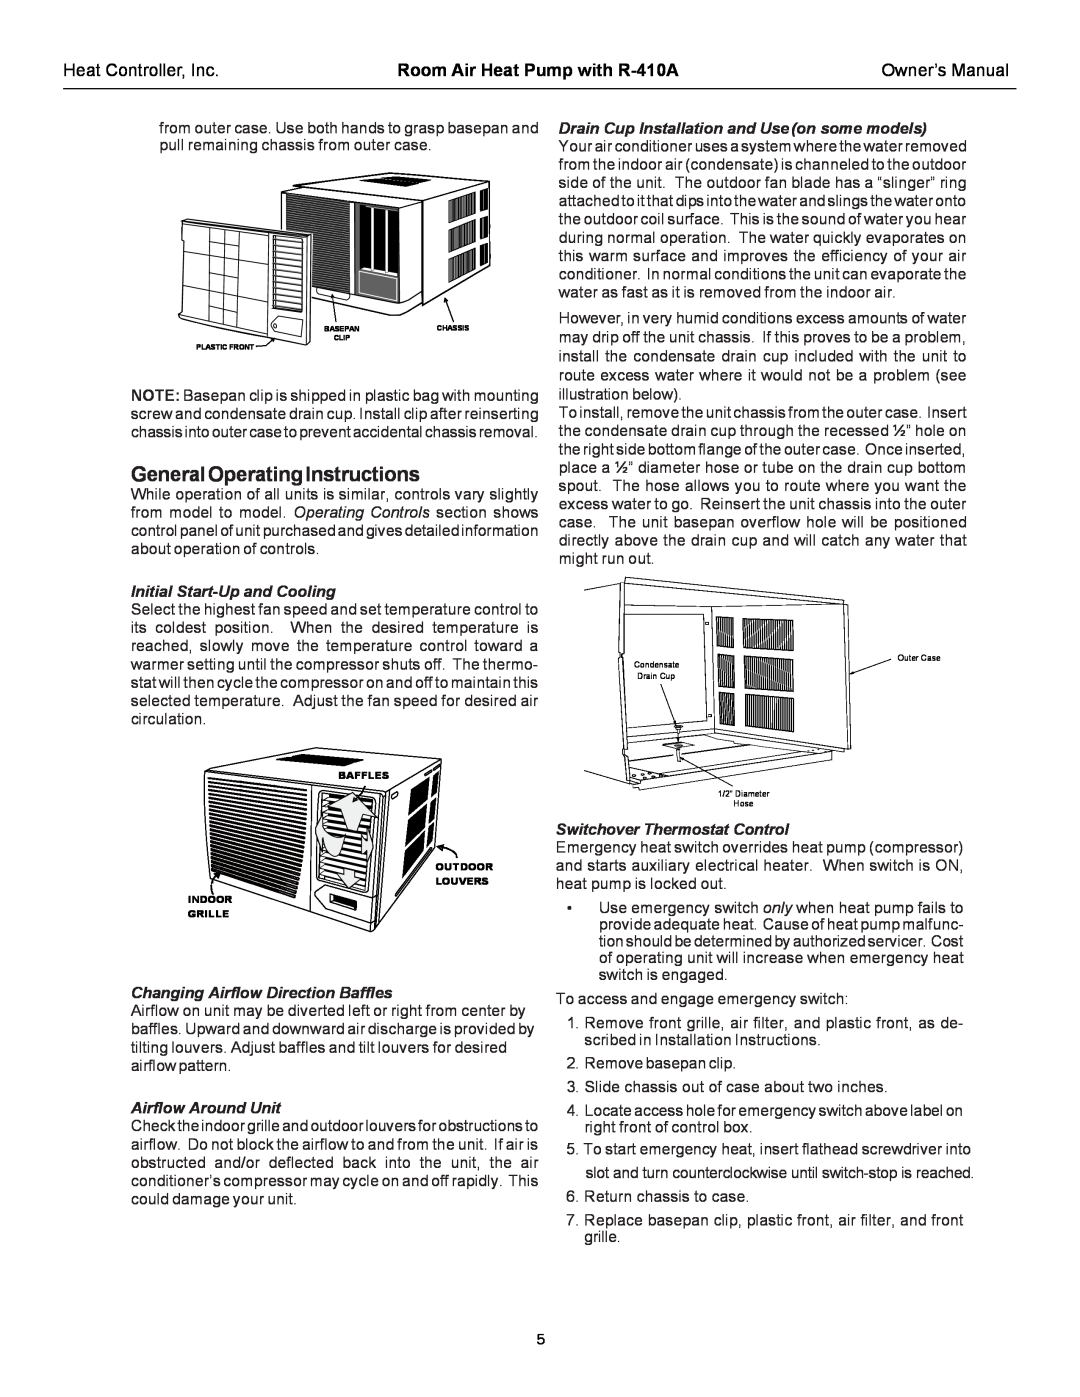 Heat Controller RAH-183G GeneralOperatingInstructions, Initial Start-Upand Cooling, Changing Airflow Direction Baffles 